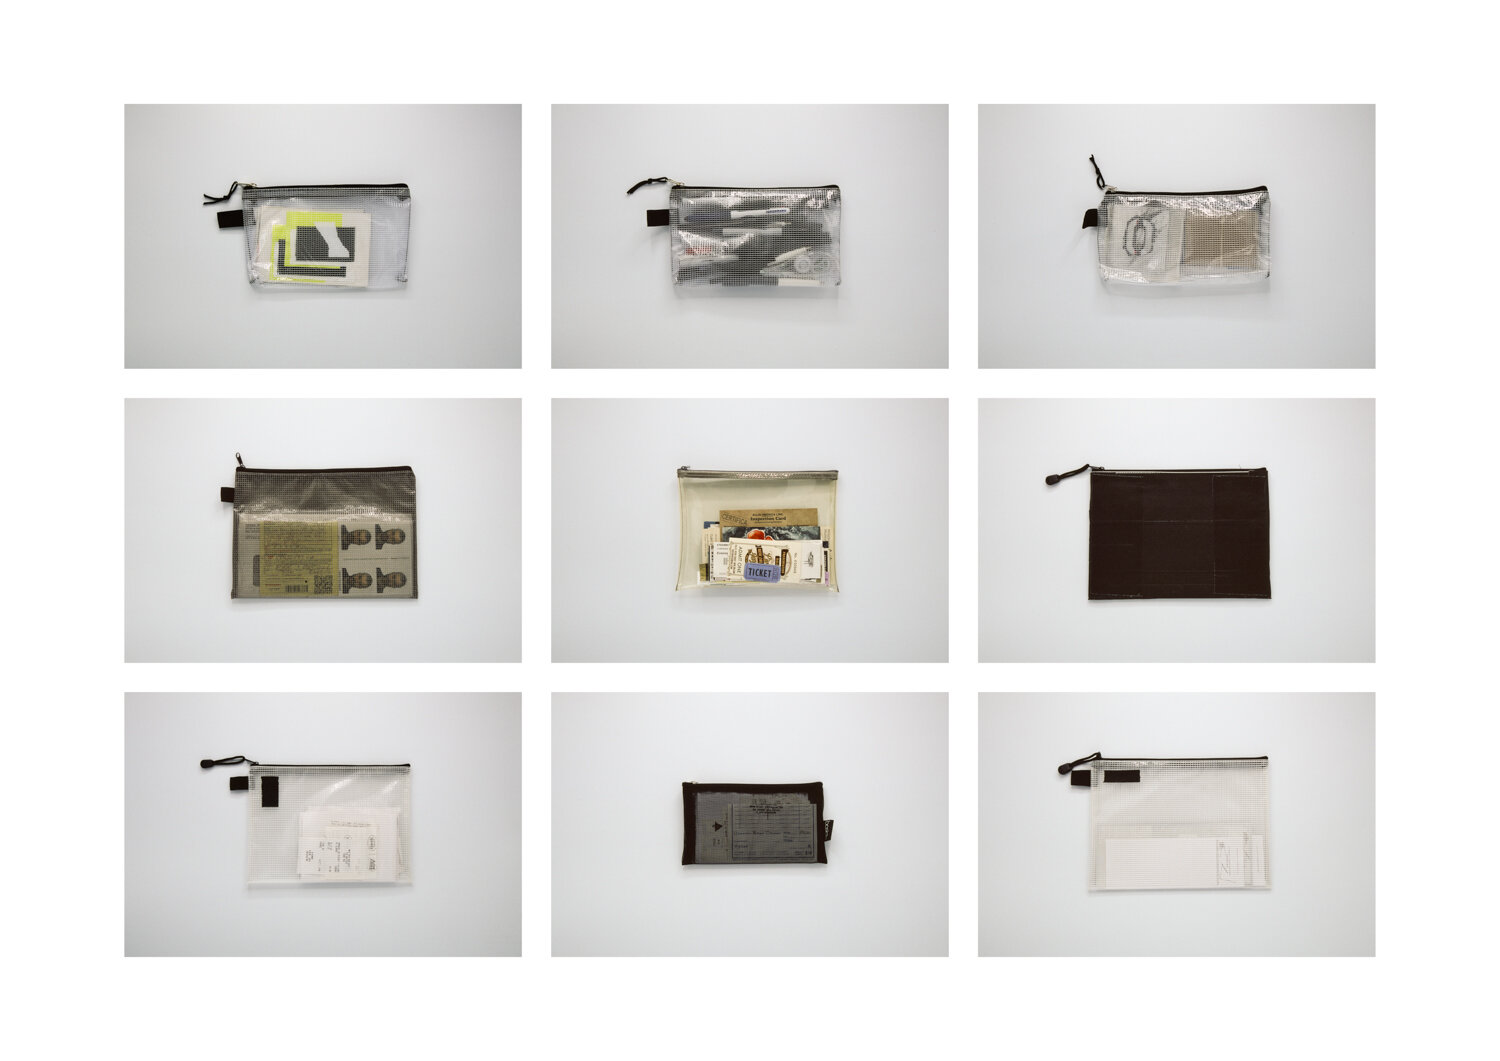       Mesh zipper bags (a) 2012 / 2019 New York     35mm color reversal       